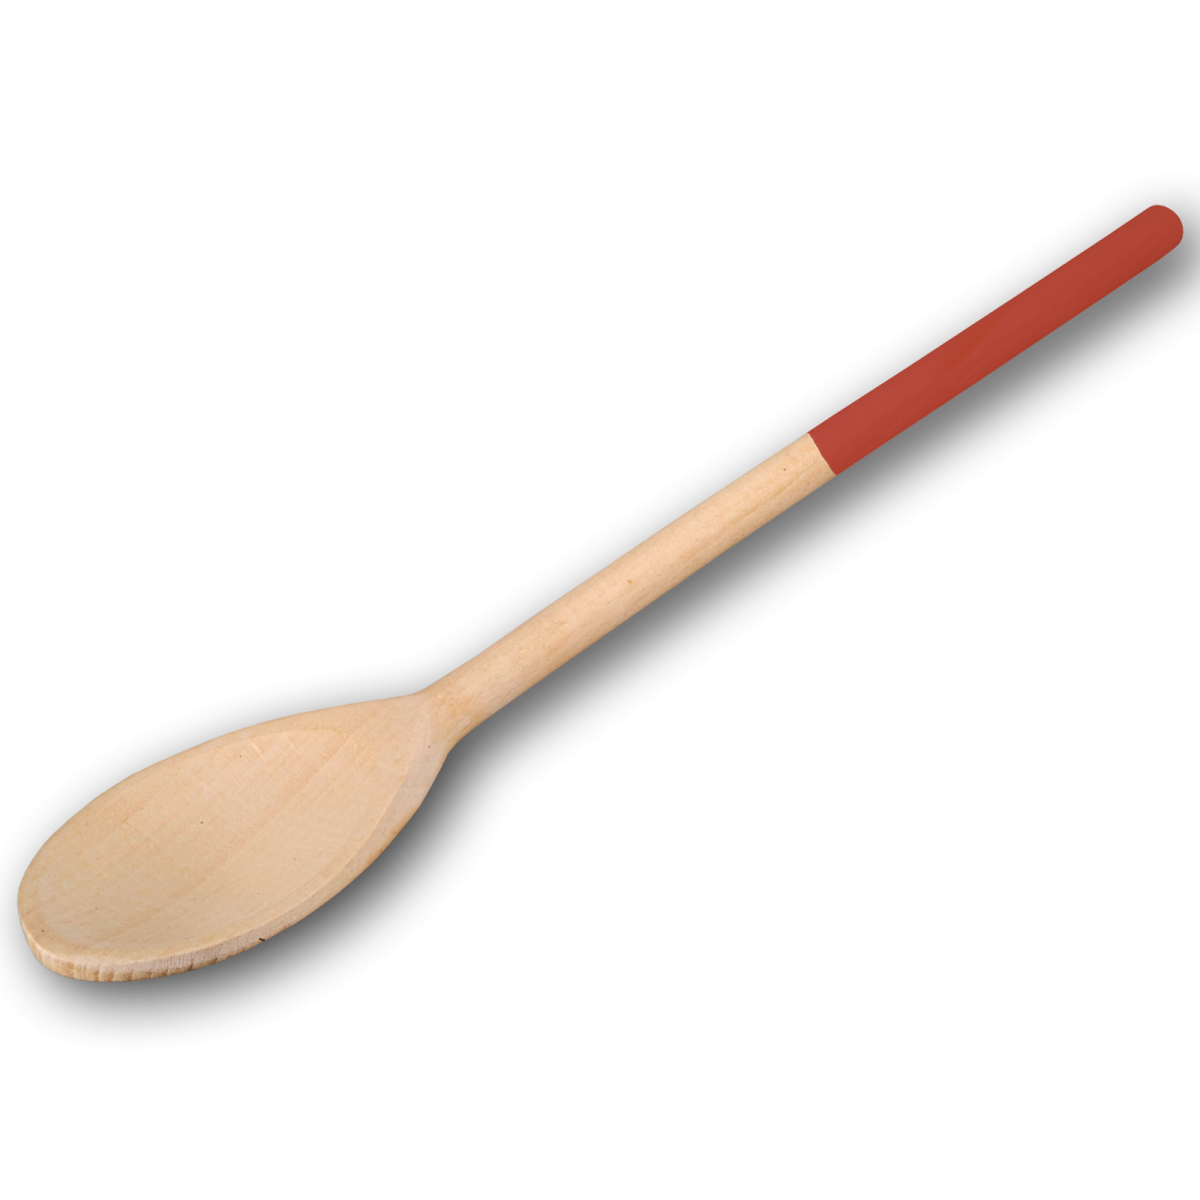 Kochlöffel, oval, mit farbigem Griff, feuerrot, aus Holz 30 cm